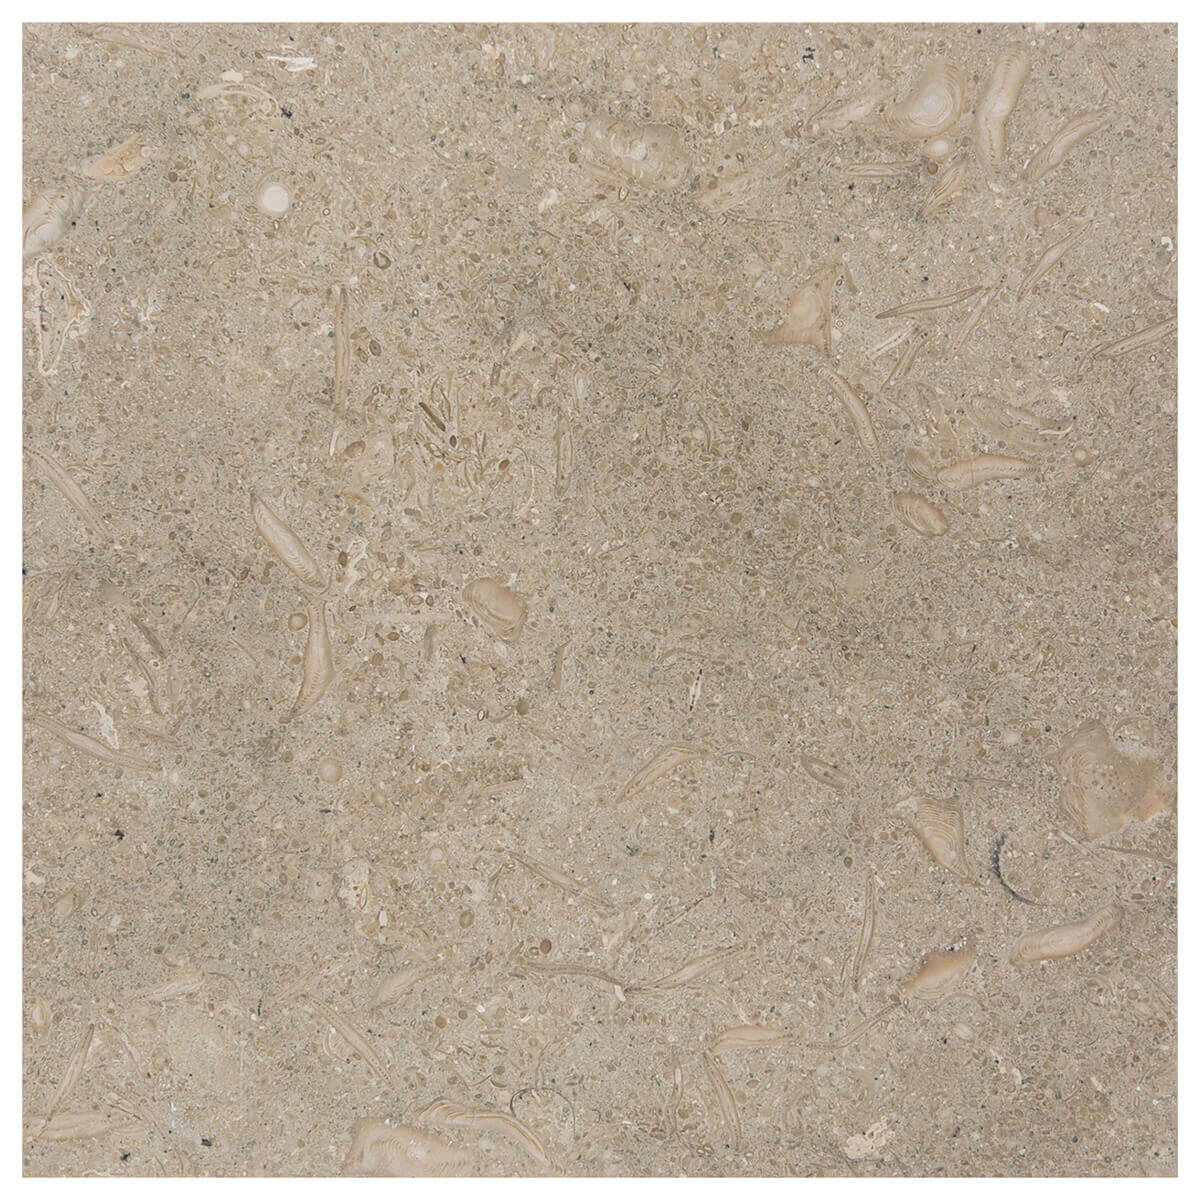 haussmann pistache seagrass limestone square natural stone field tile 12x12 honed